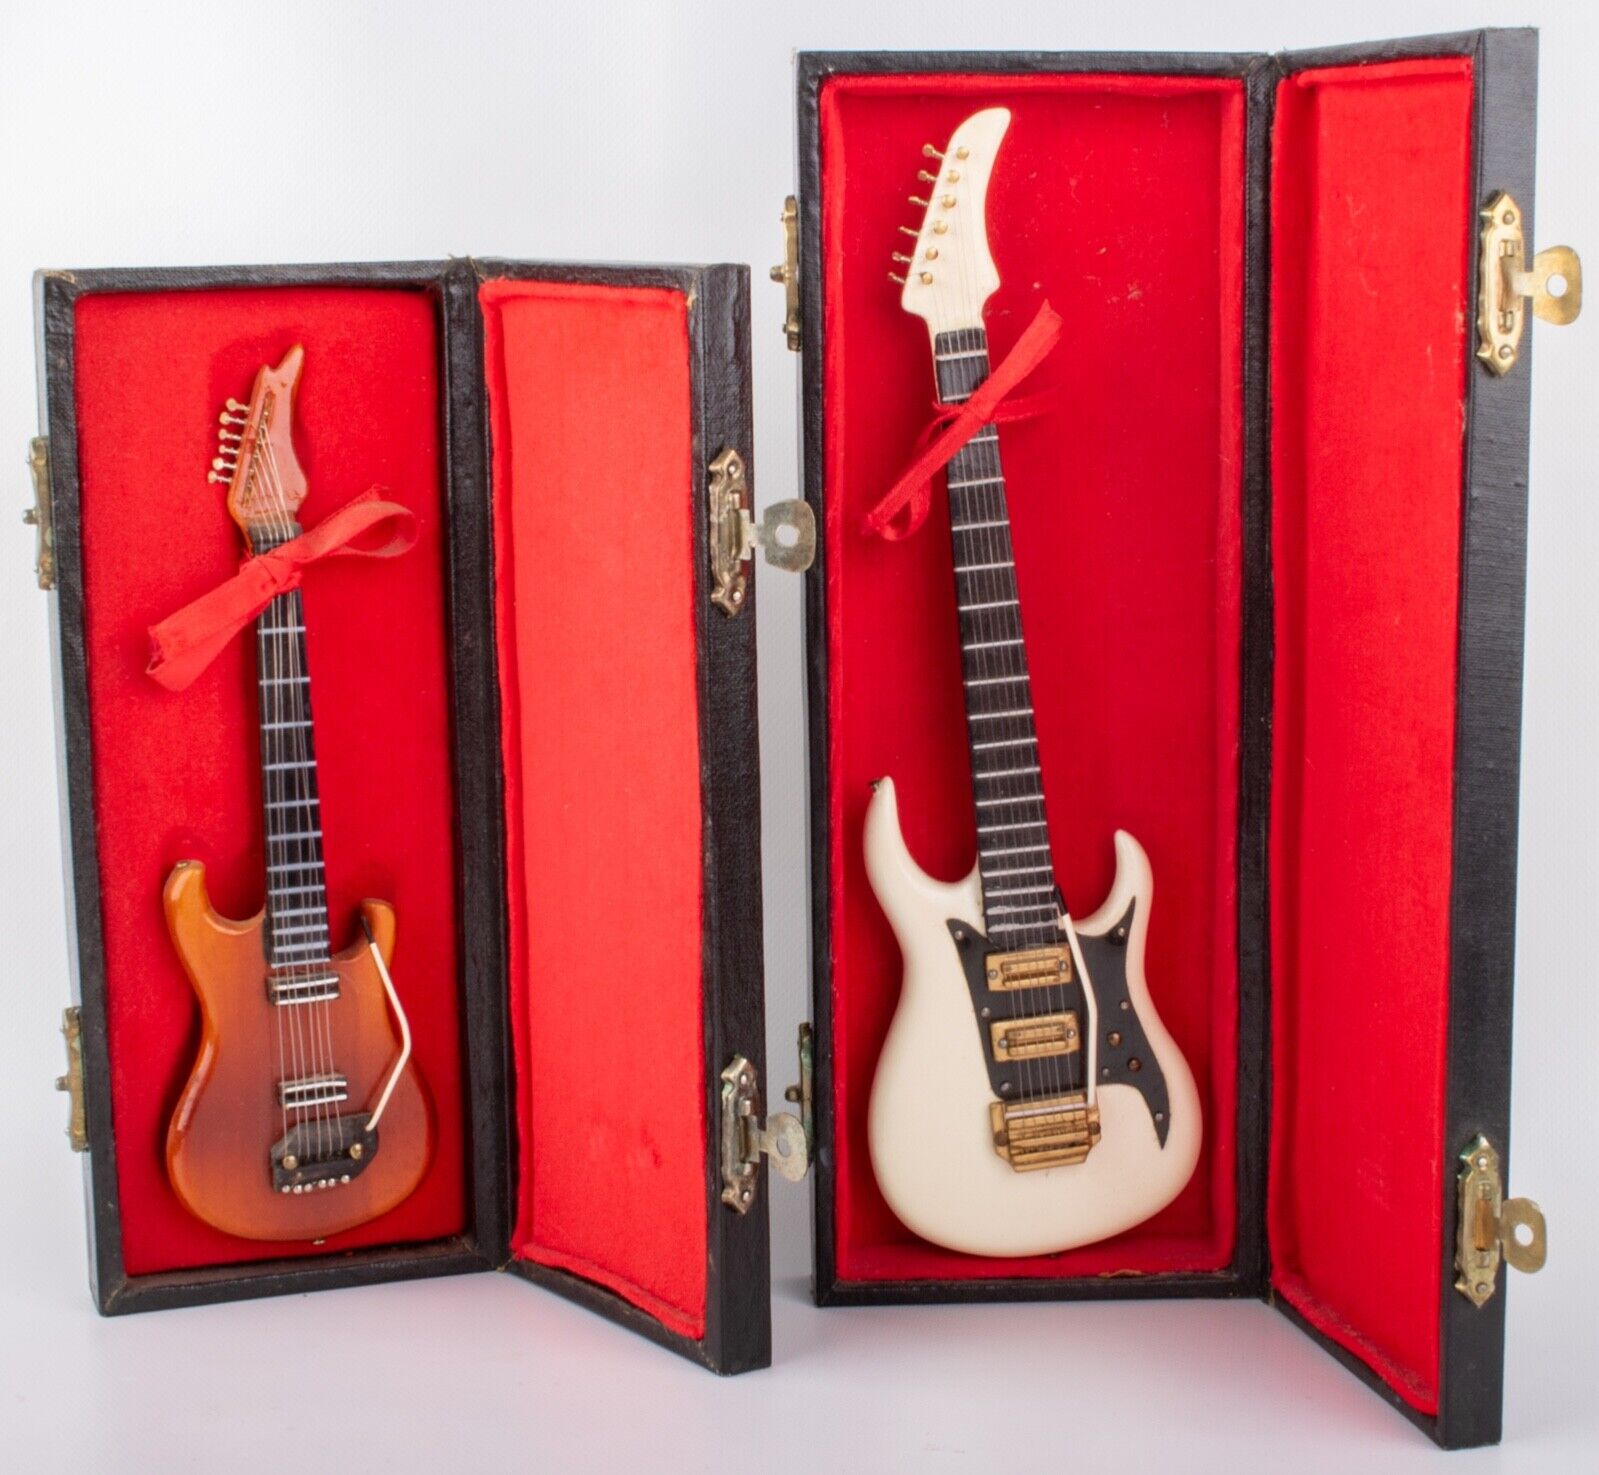 Vintage Handmade Mini Electric Guitar Miniatures Authentic Models Replicas (Two)